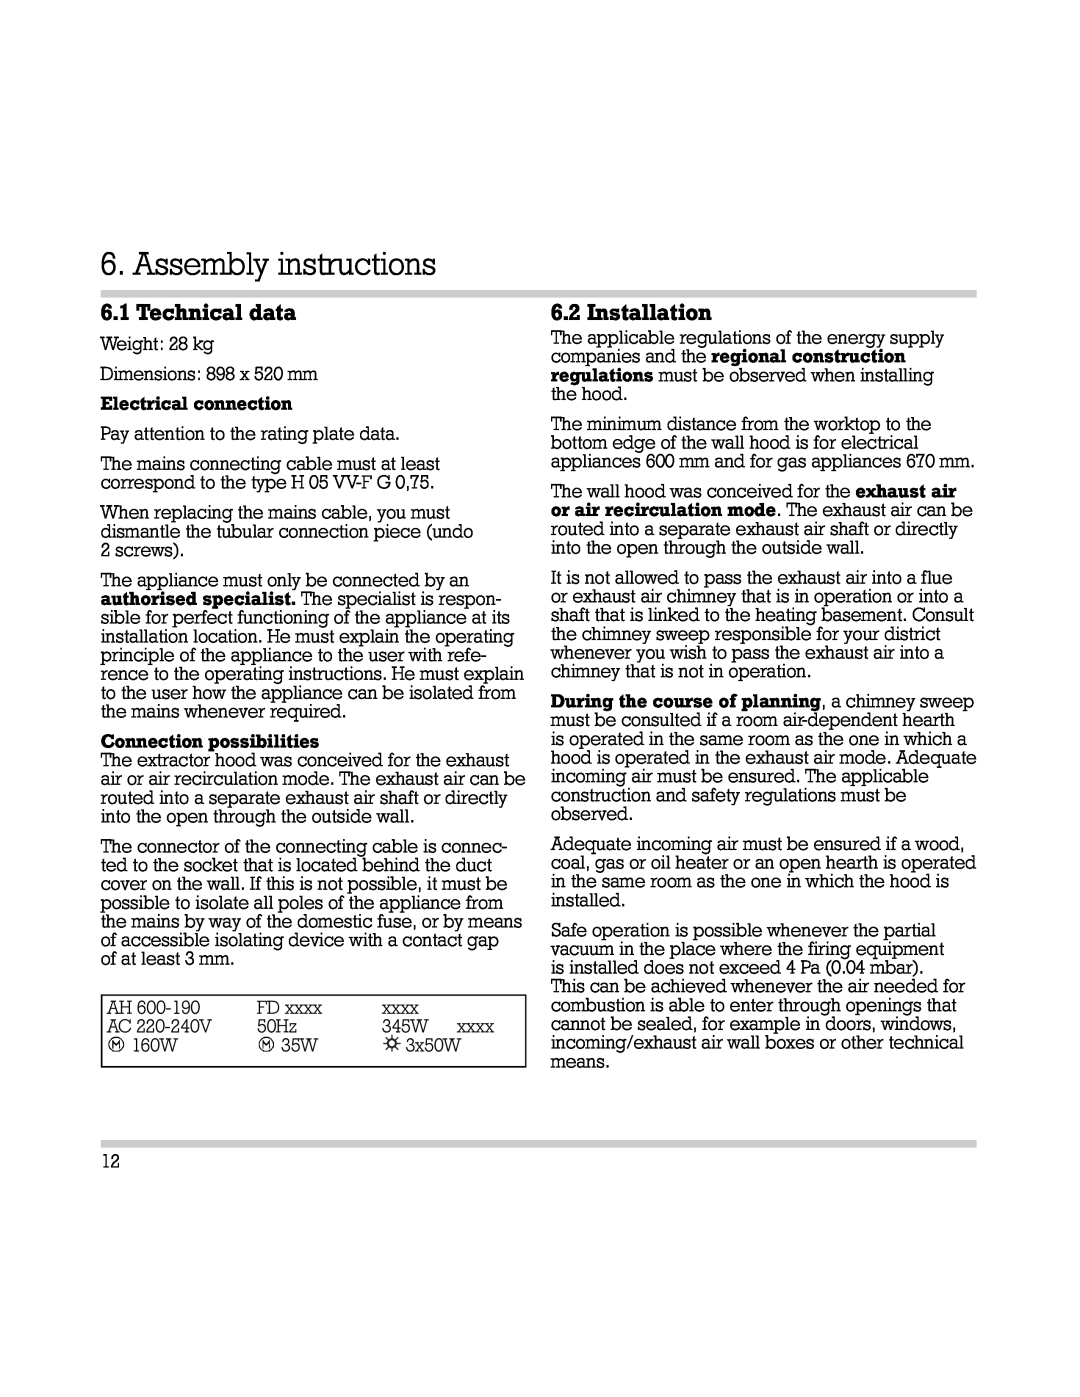 Gaggenau AH 600-190 manual Assembly instructions, Technical data, Installation 